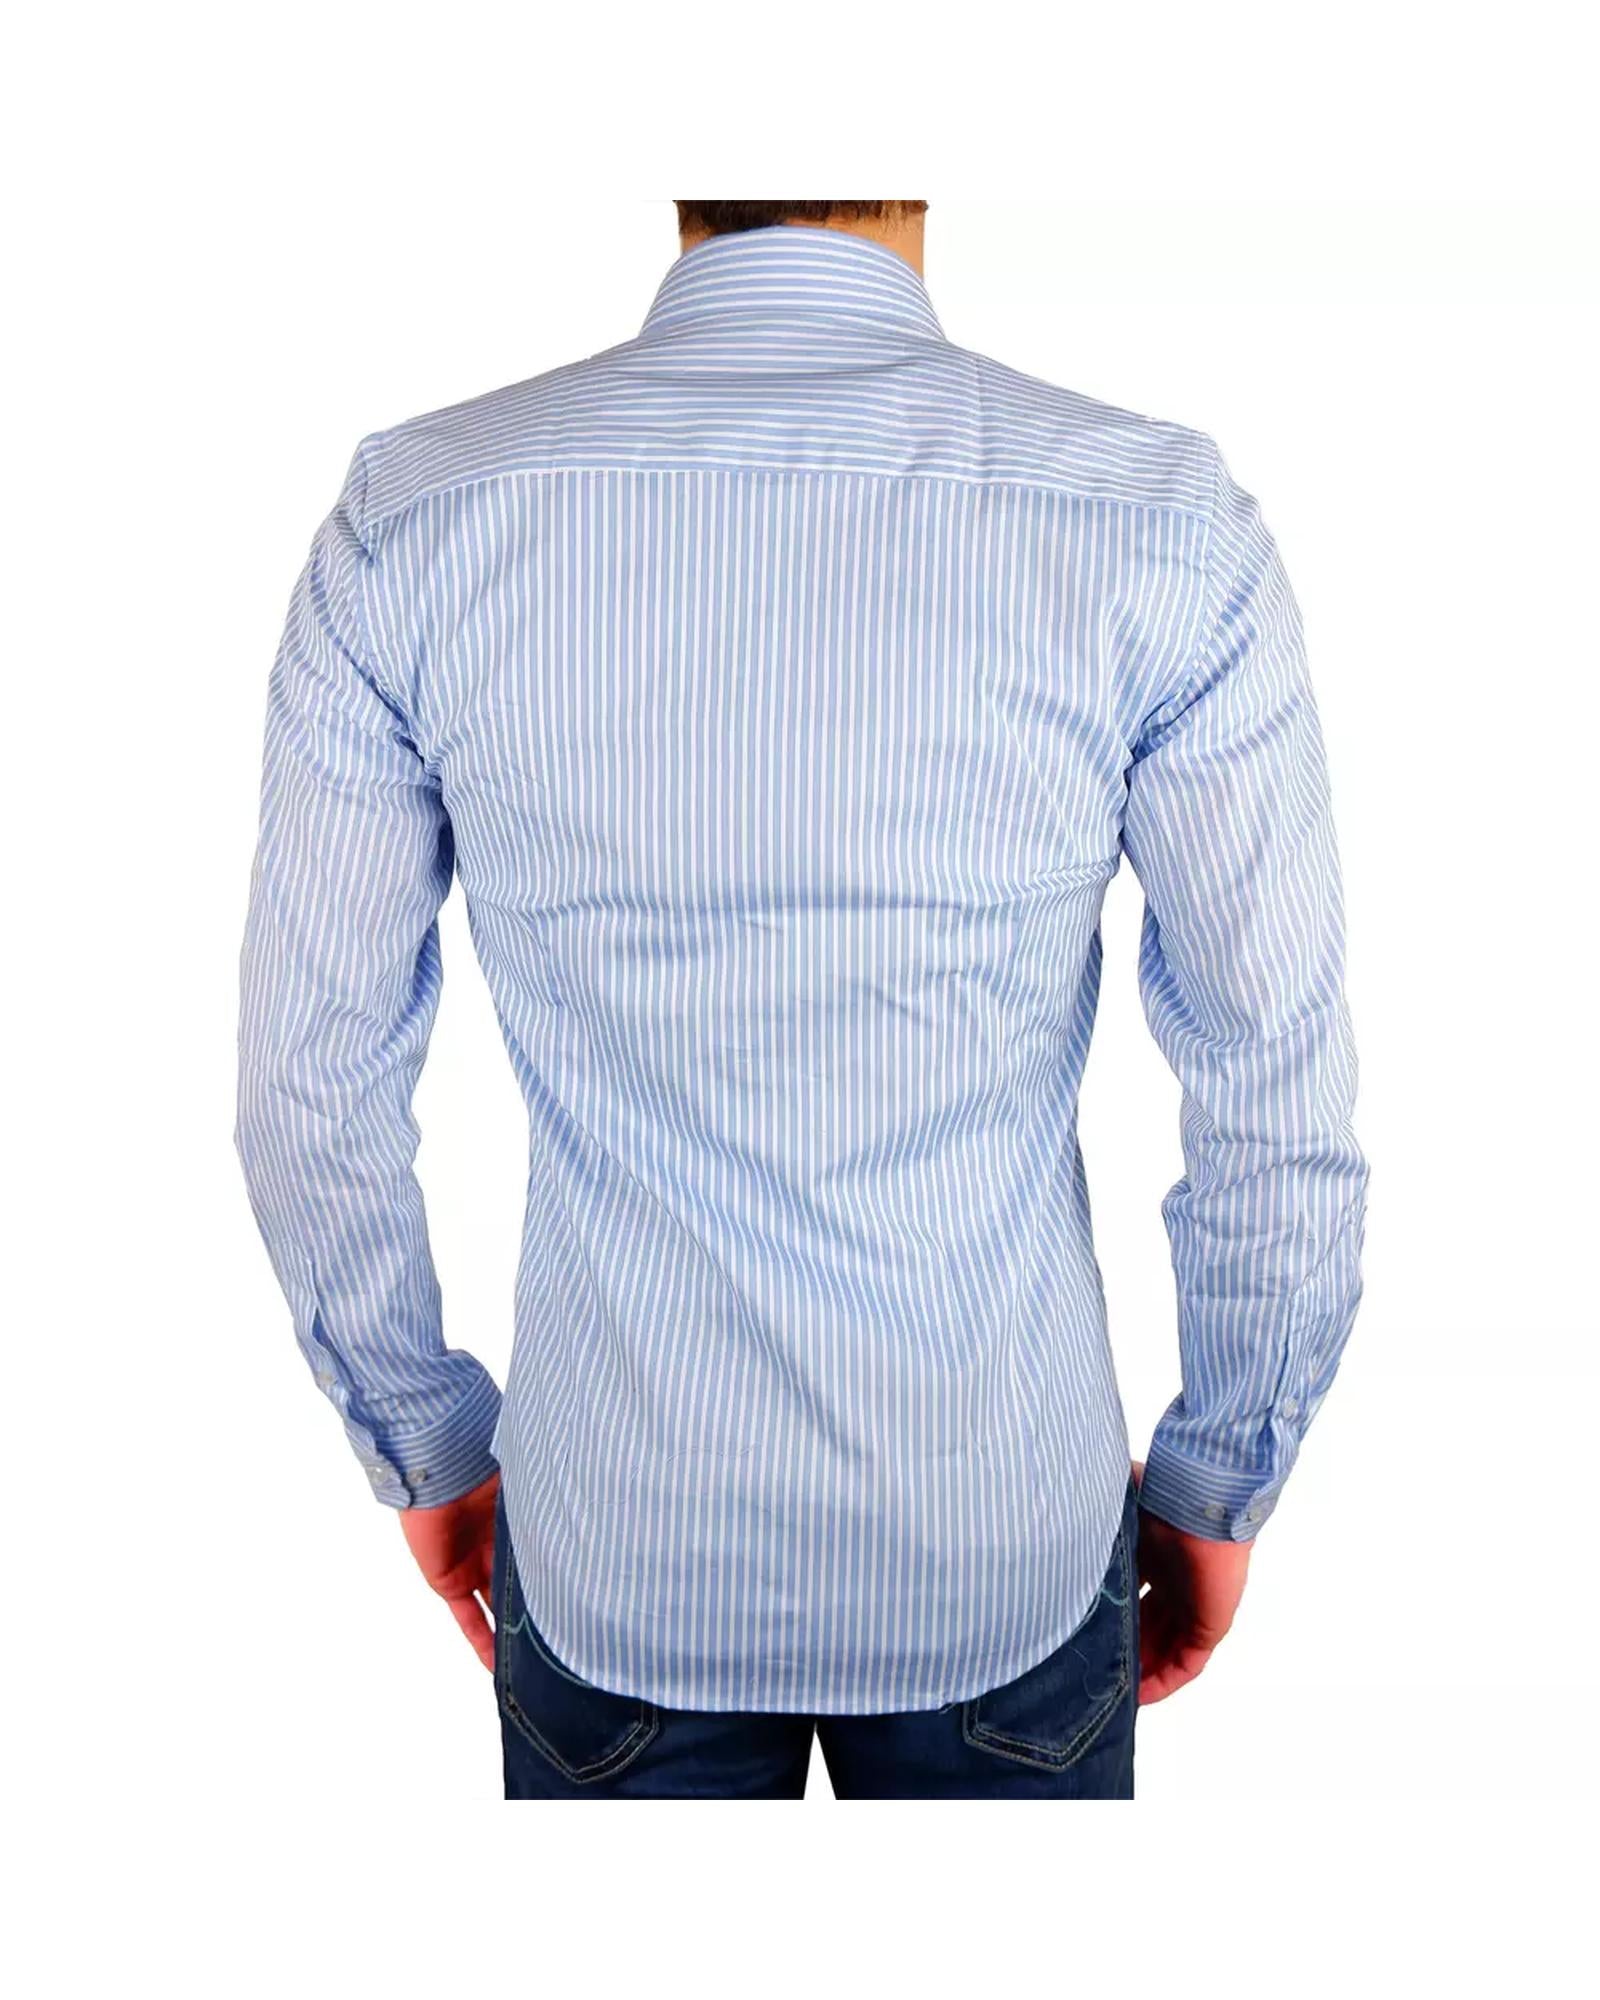 Milano Light Blue Striped Shirt - 100% Cotton 41 IT Men